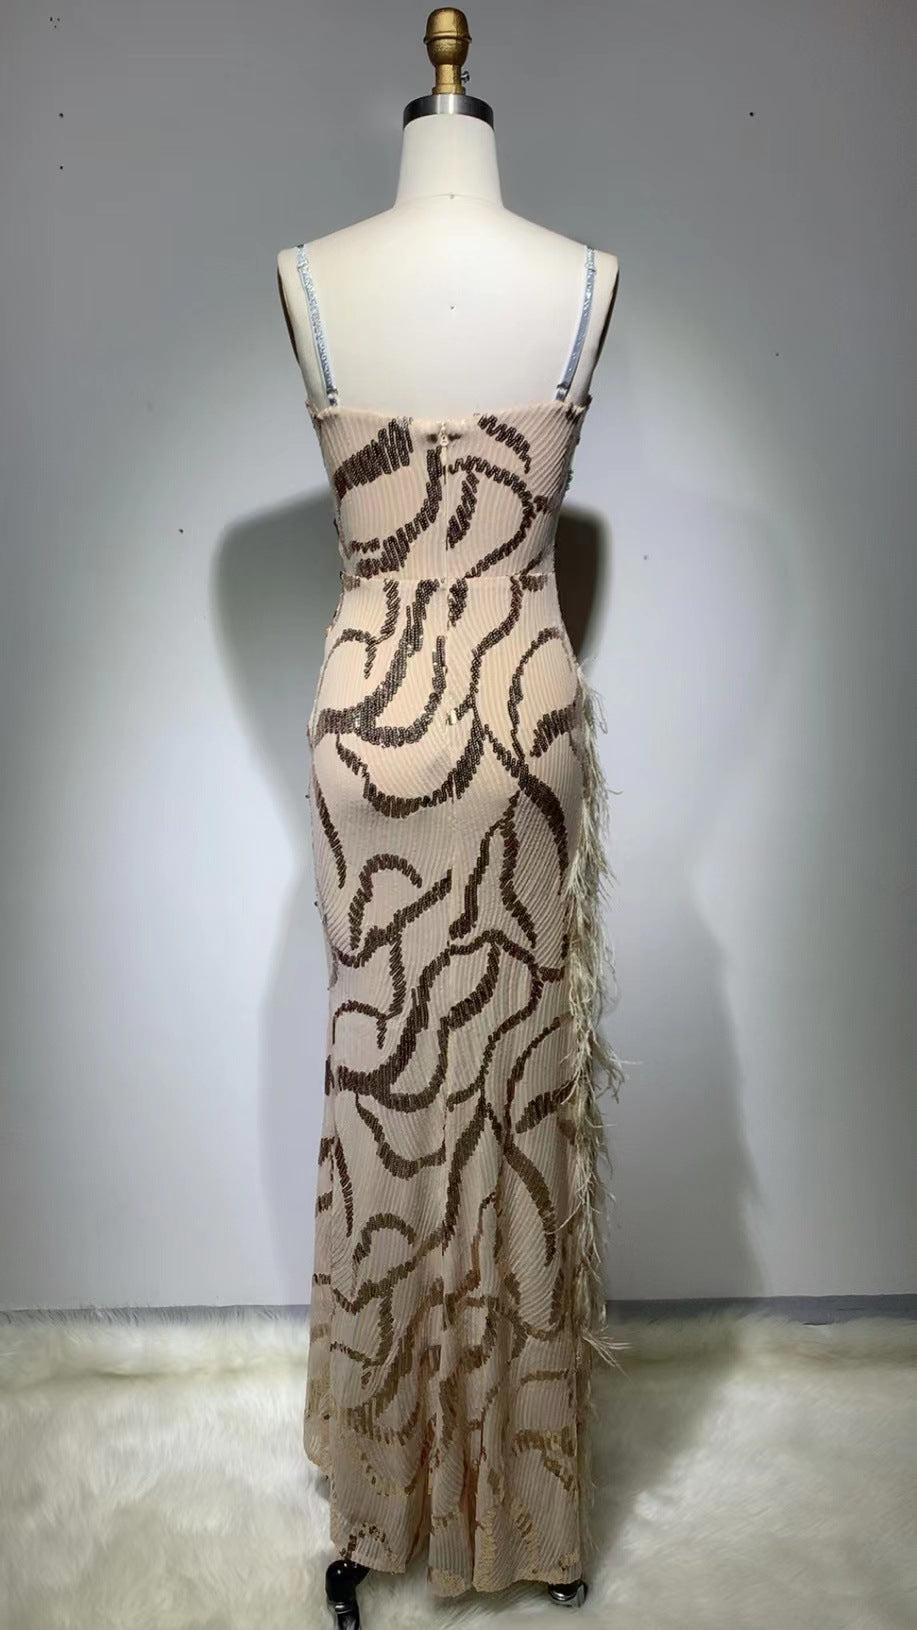 Fashion V-strap Backless Elegant Sequined Tight Split Feather Dress